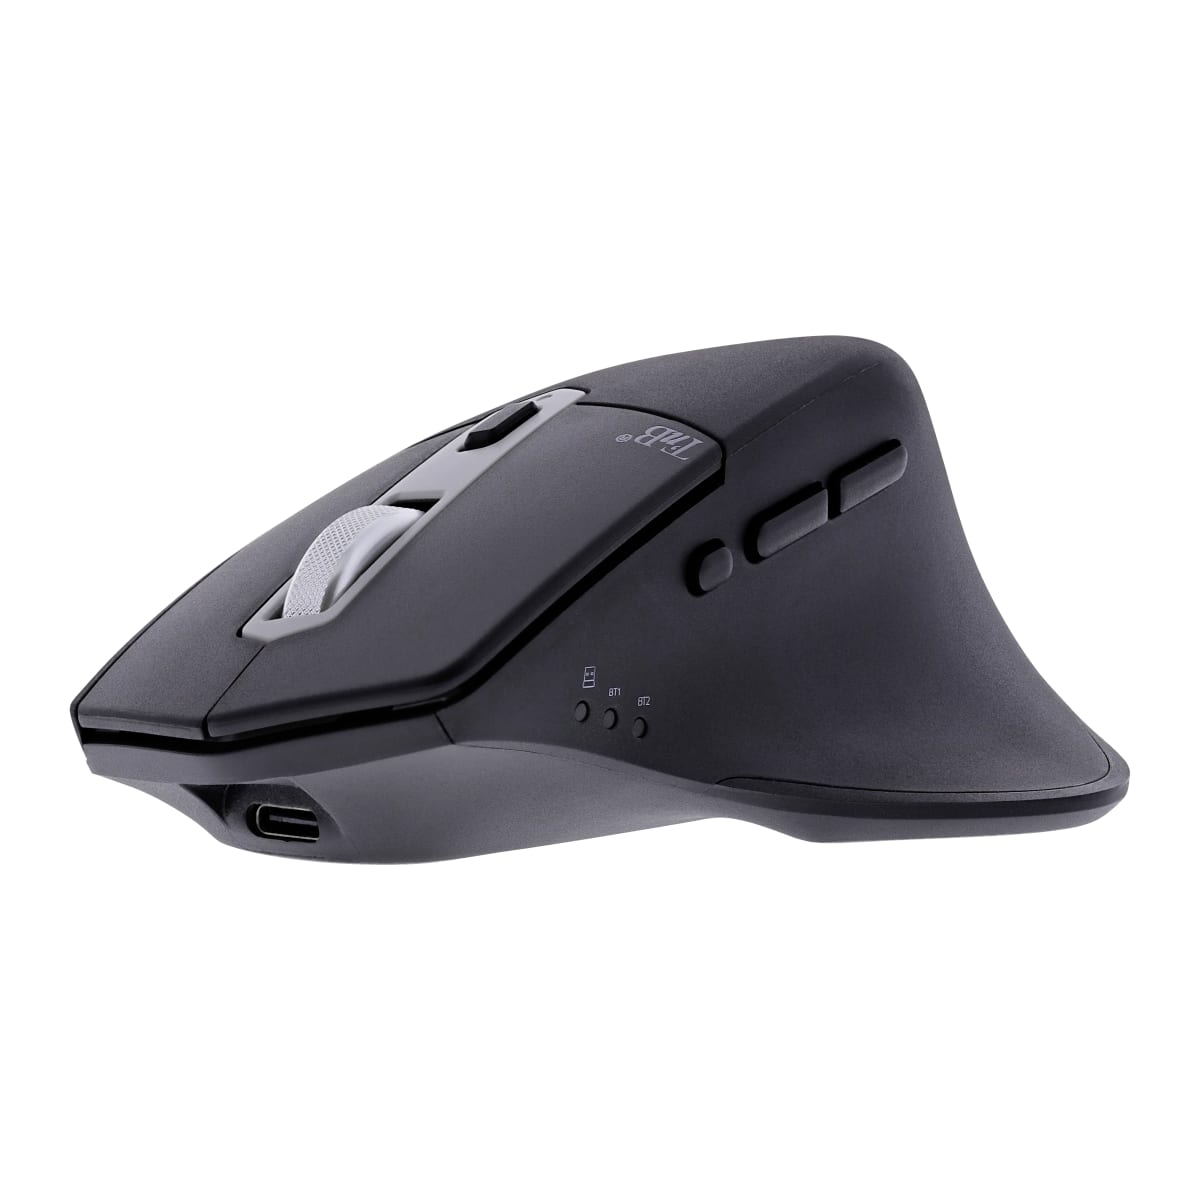 Wireless semi-ergonomic mouse DUAL CONNECT iClick - T'nB